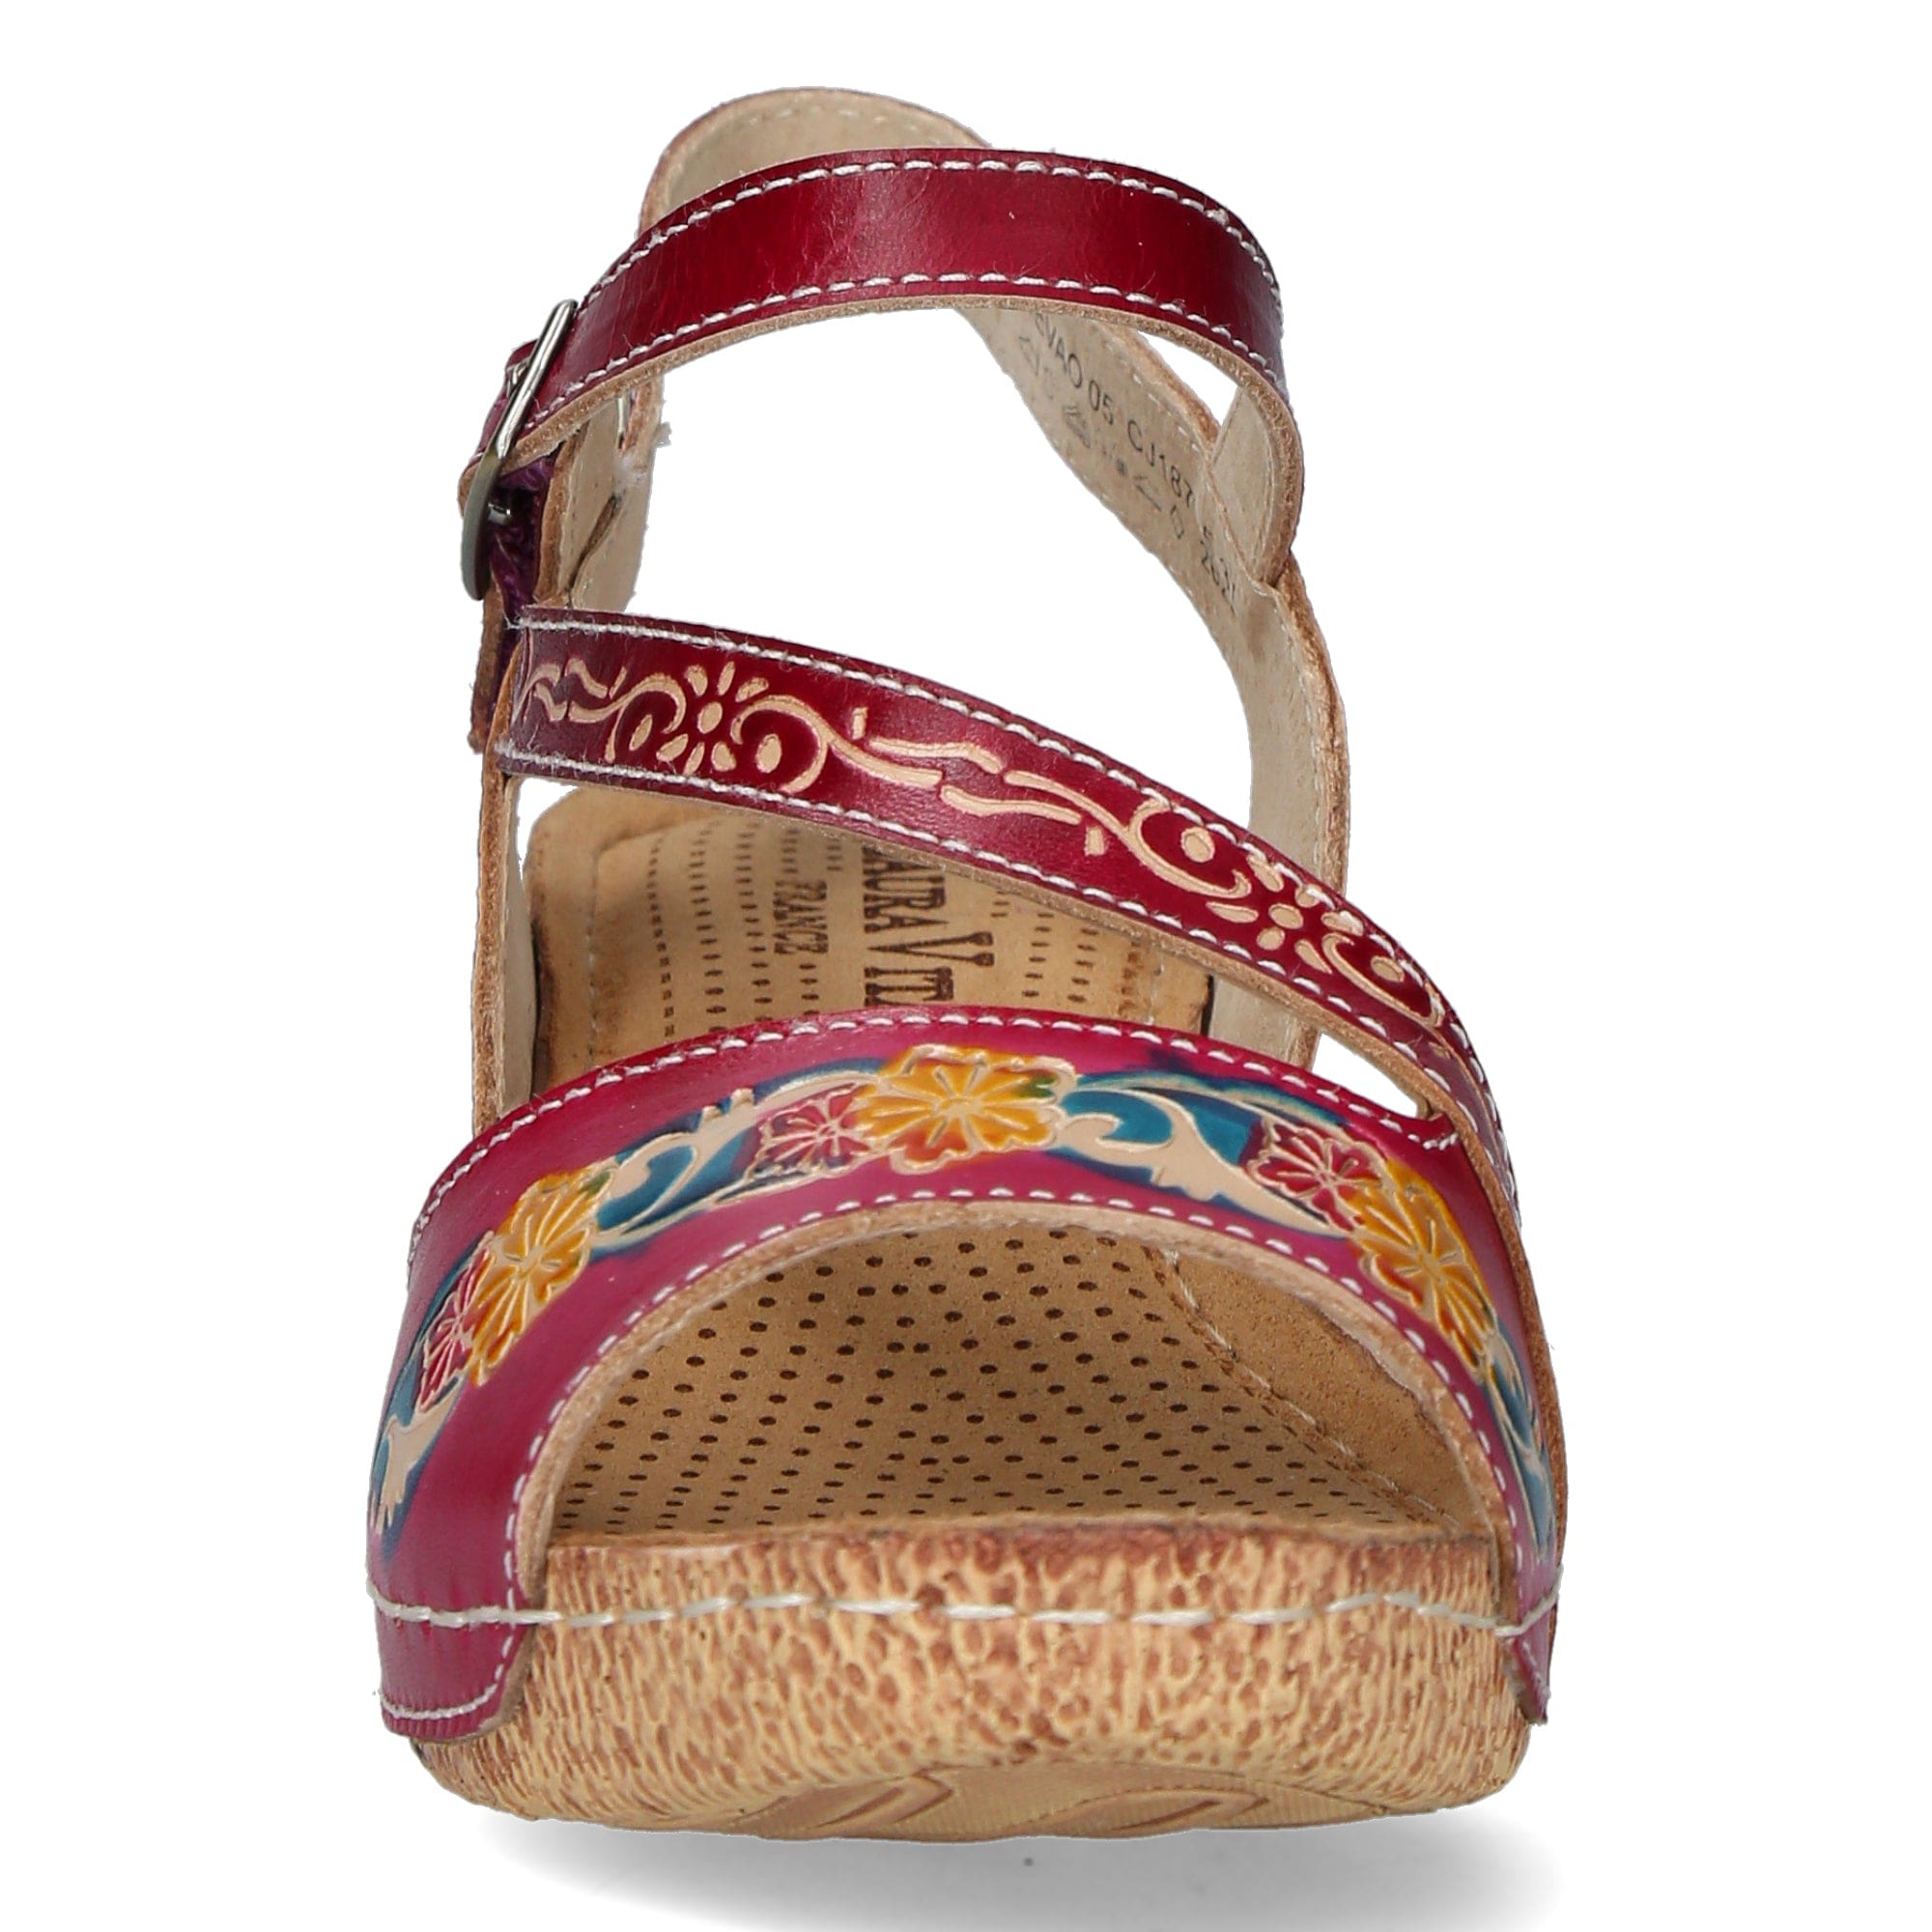 Schuh NEVAO 05 - Sandale